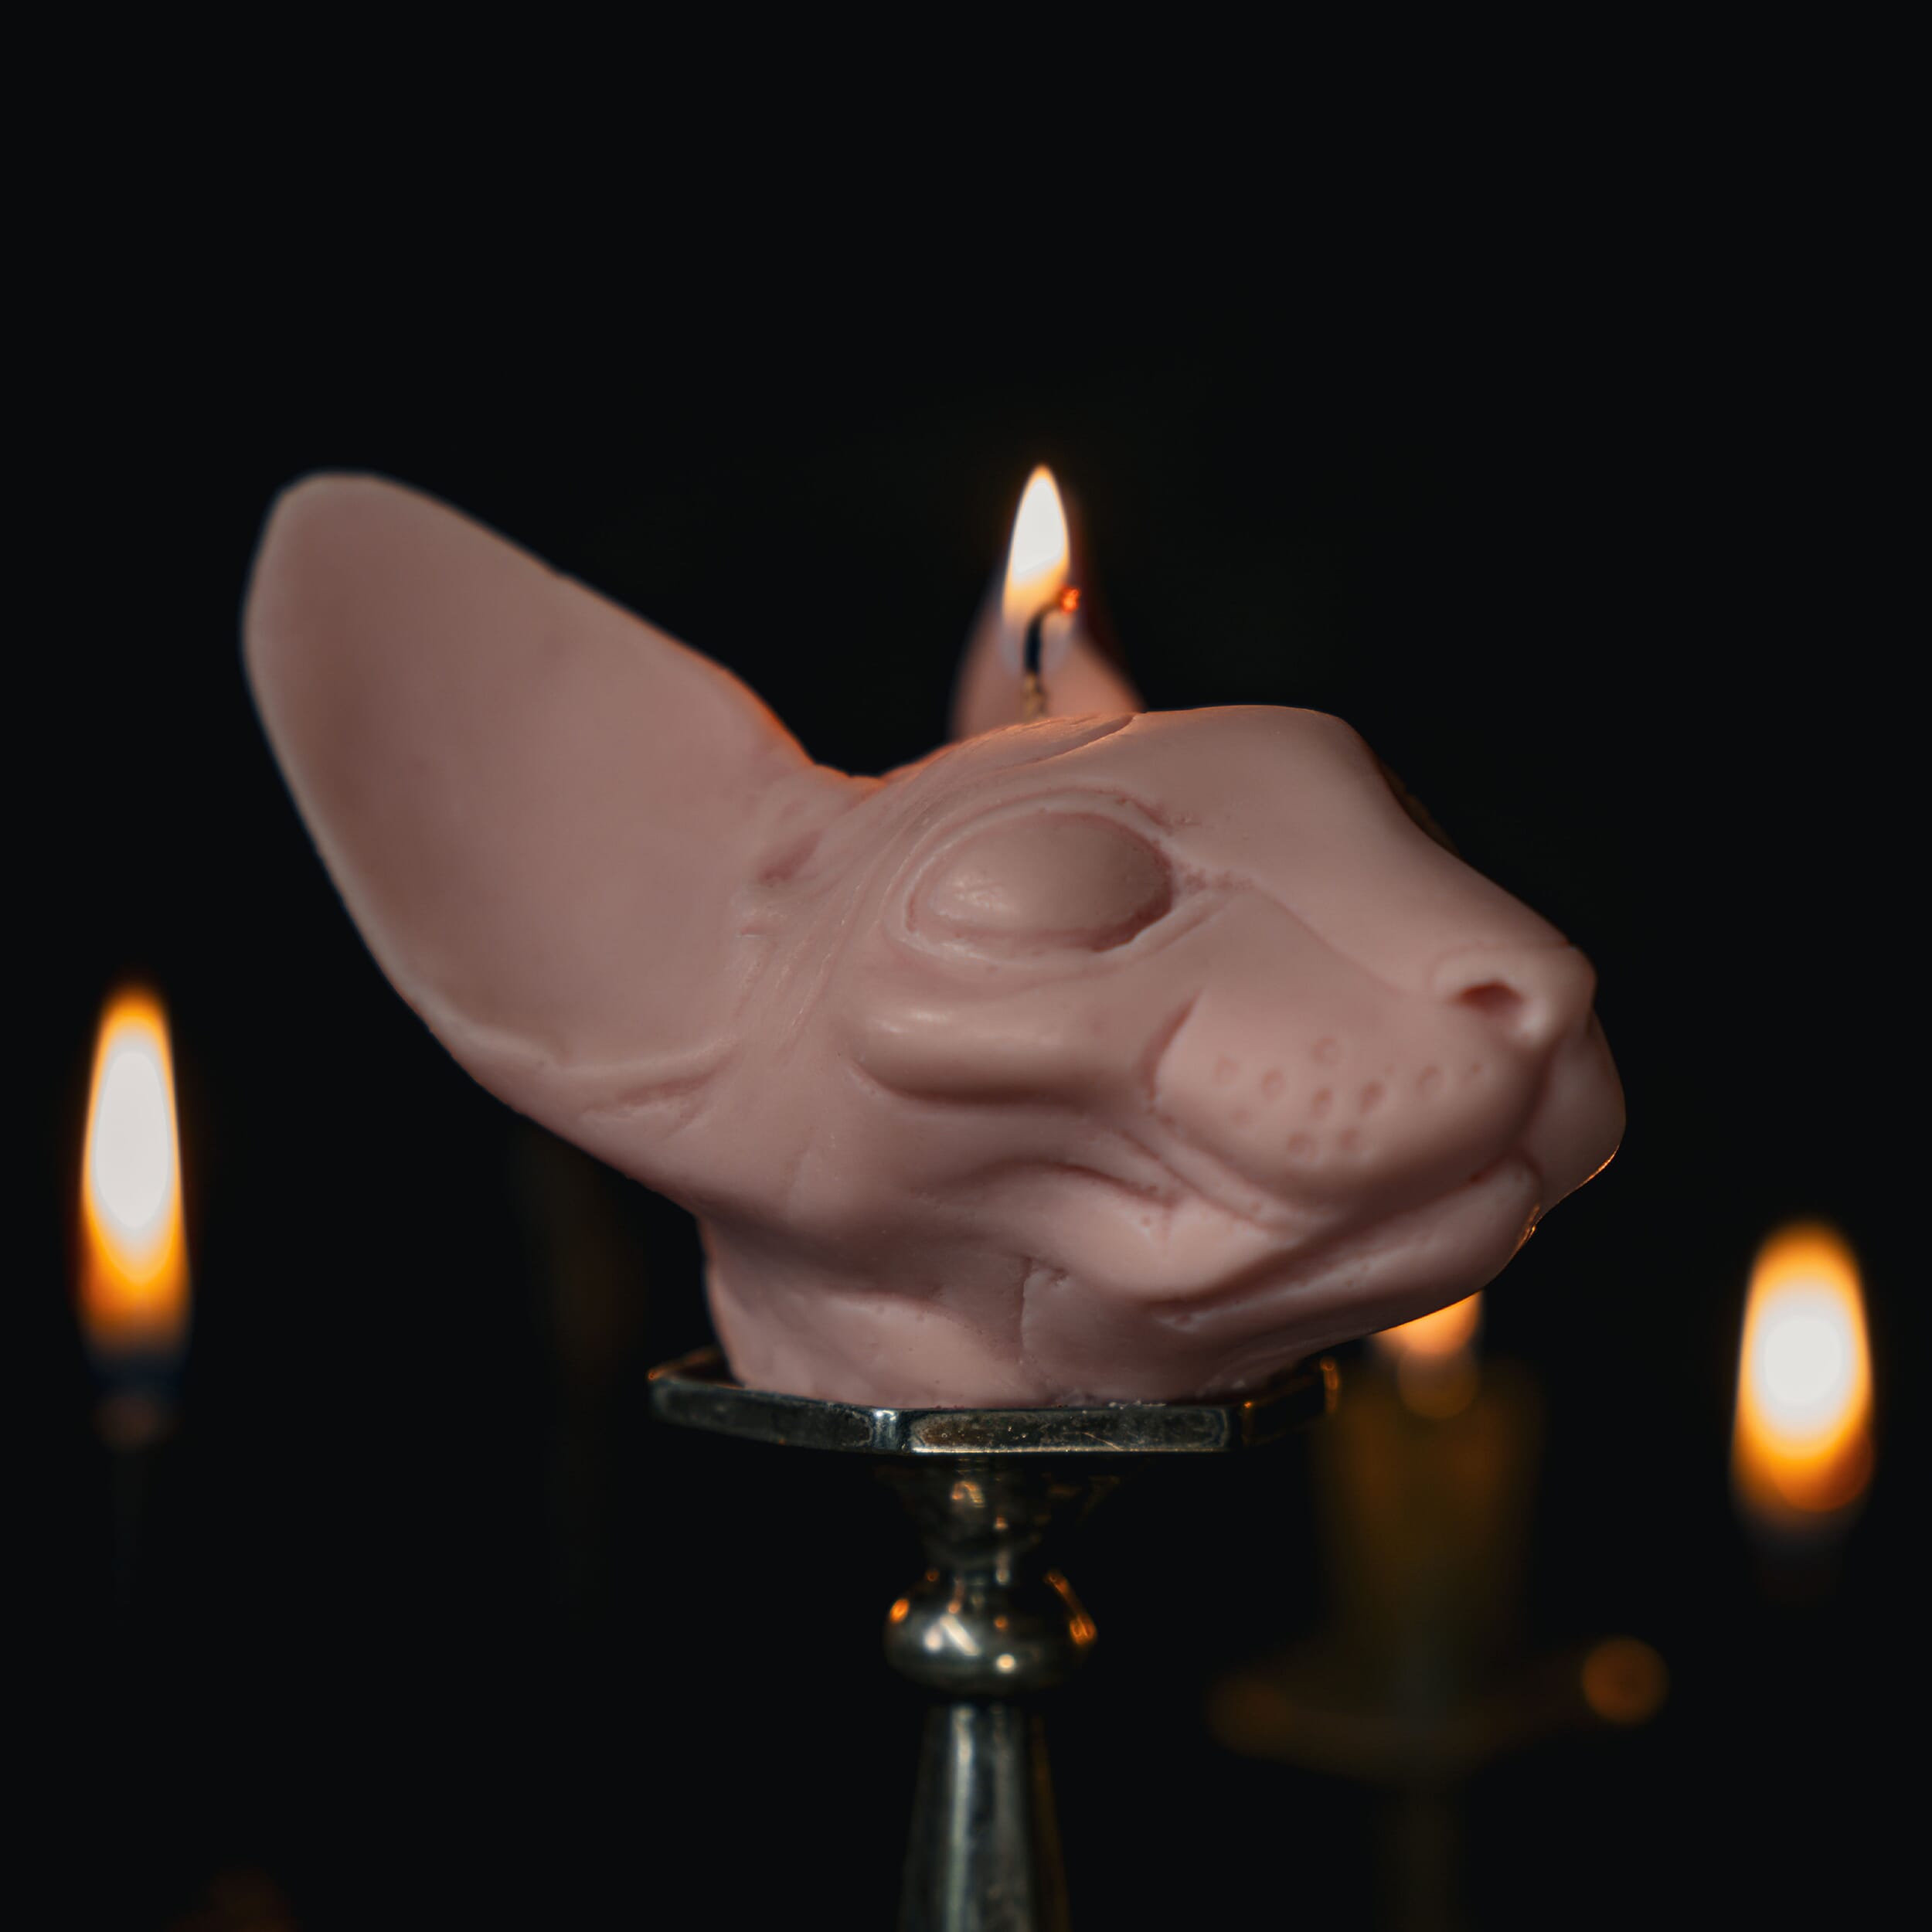 Sphynx Cat candle - The Blackened Teeth